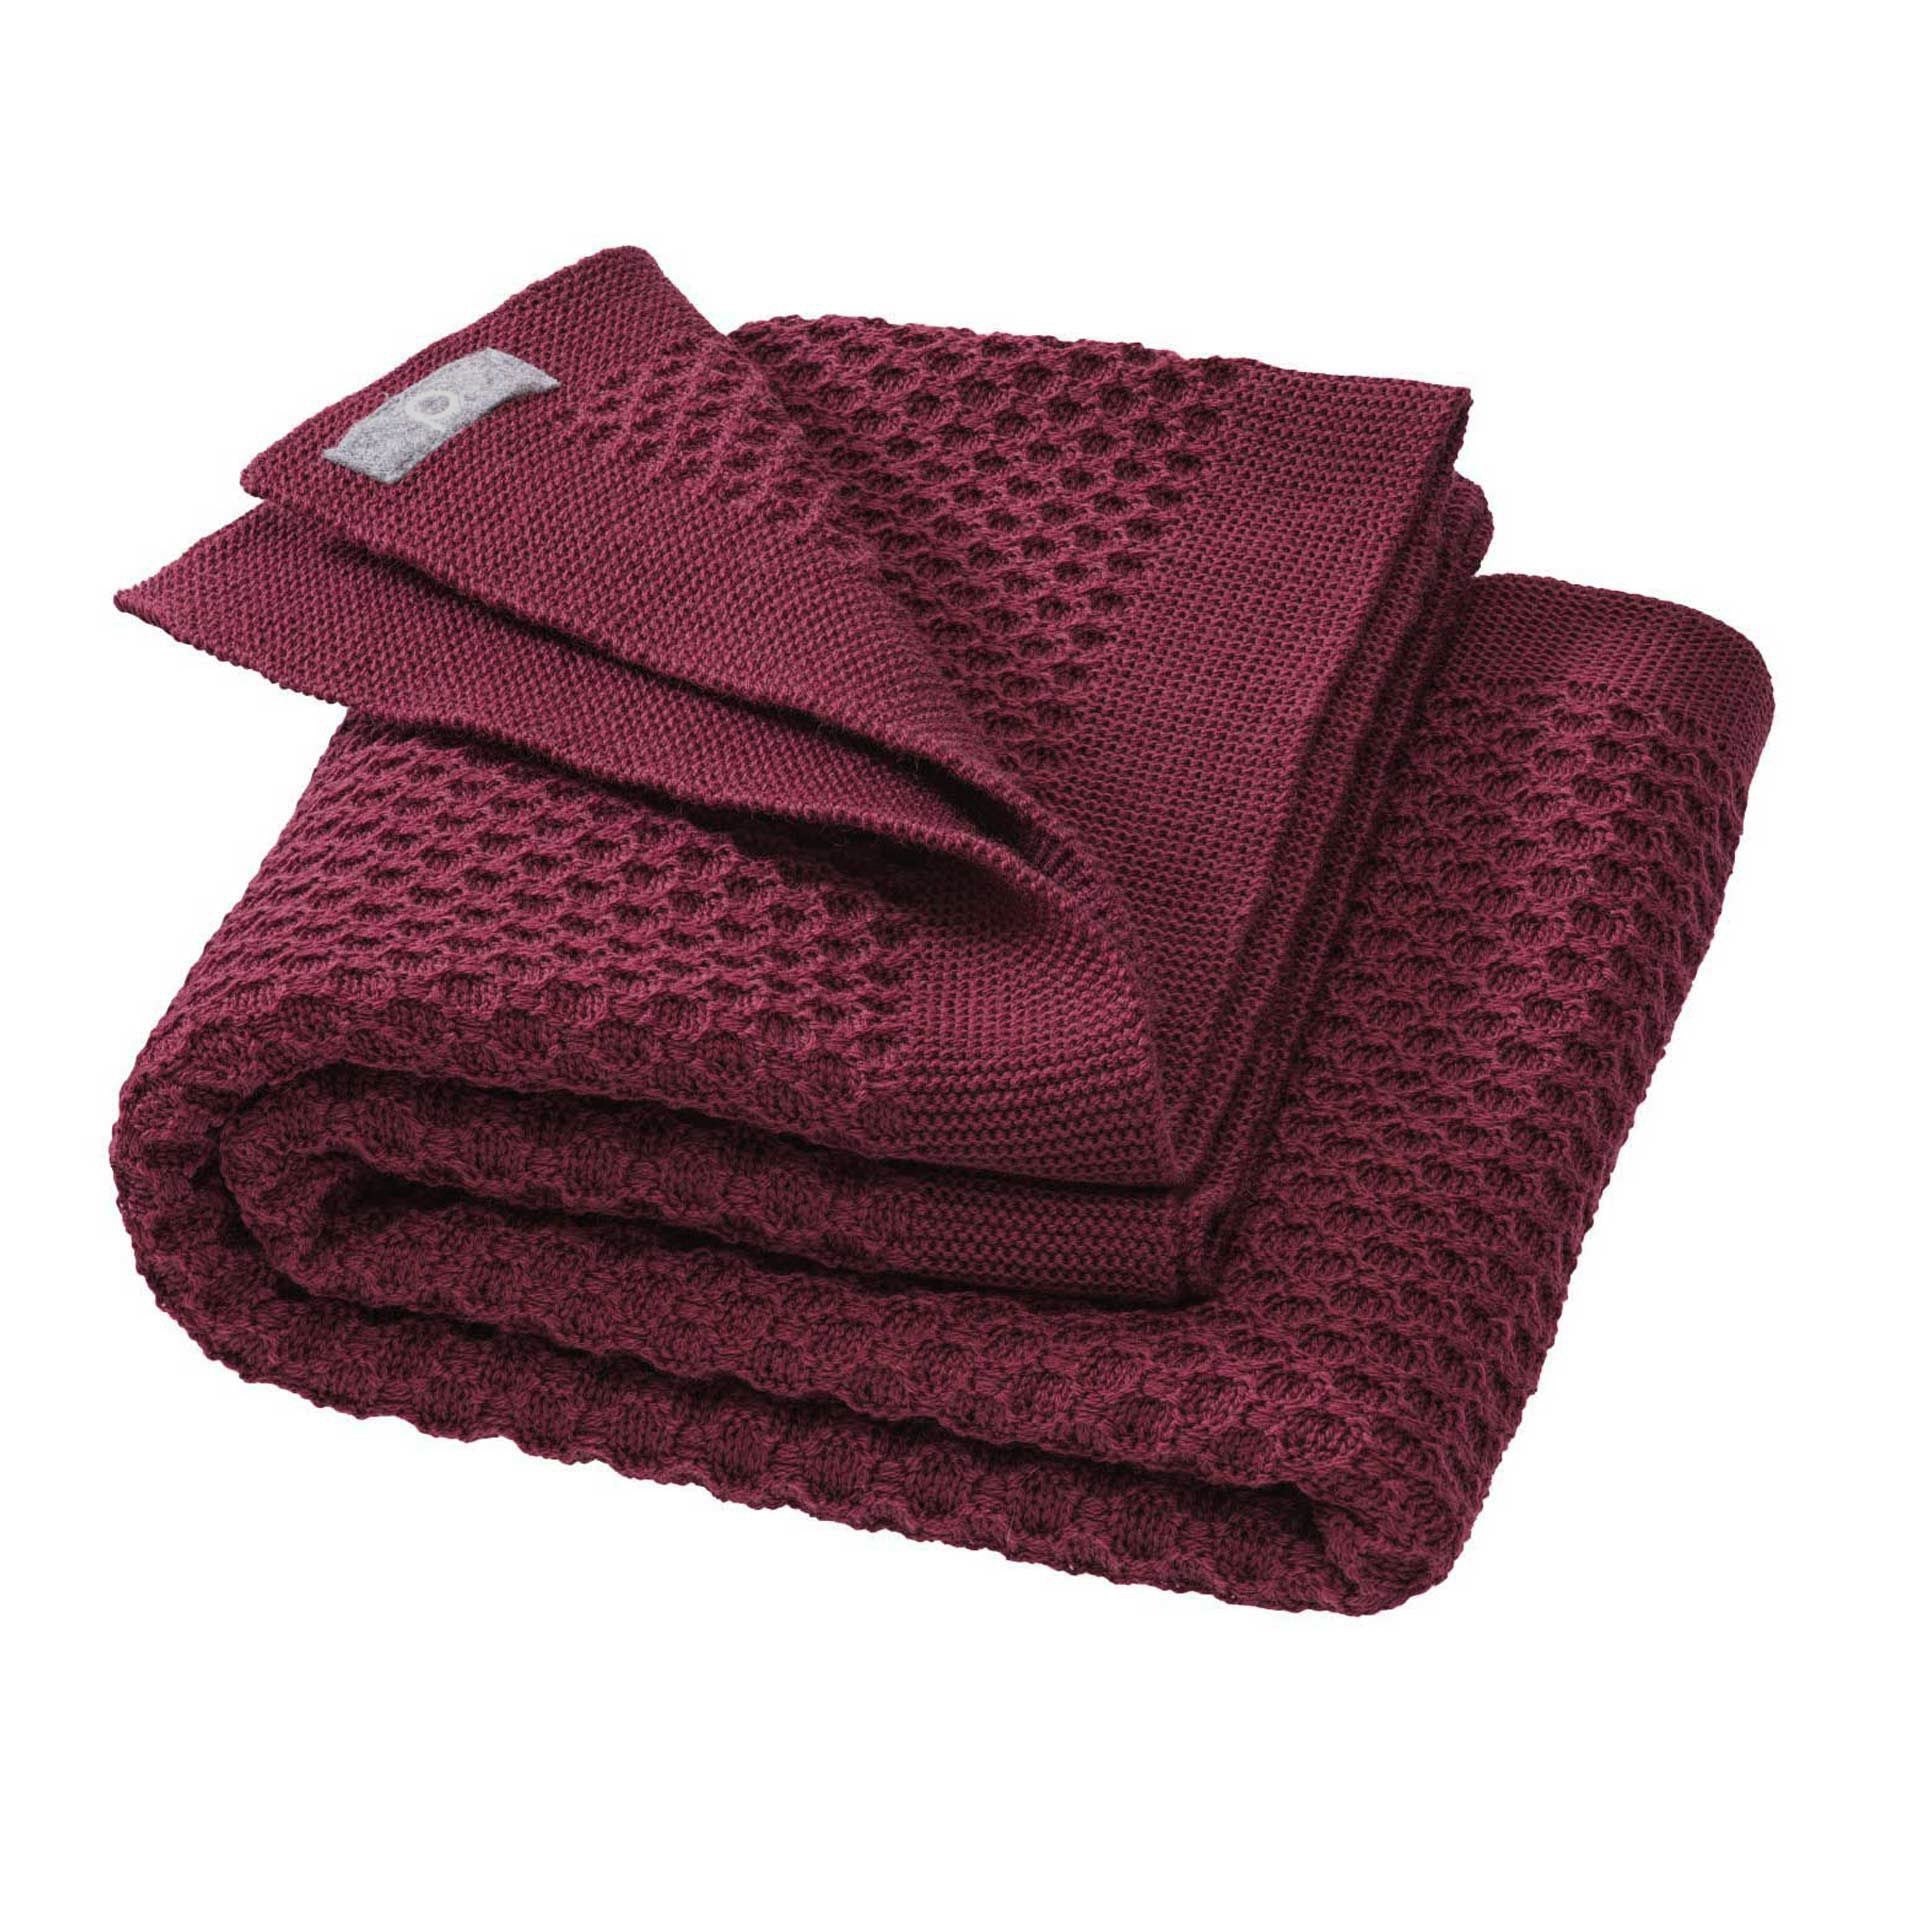 Disana&#39;s honeycomb blanket in cassis. Made of 100% soft merino wool.